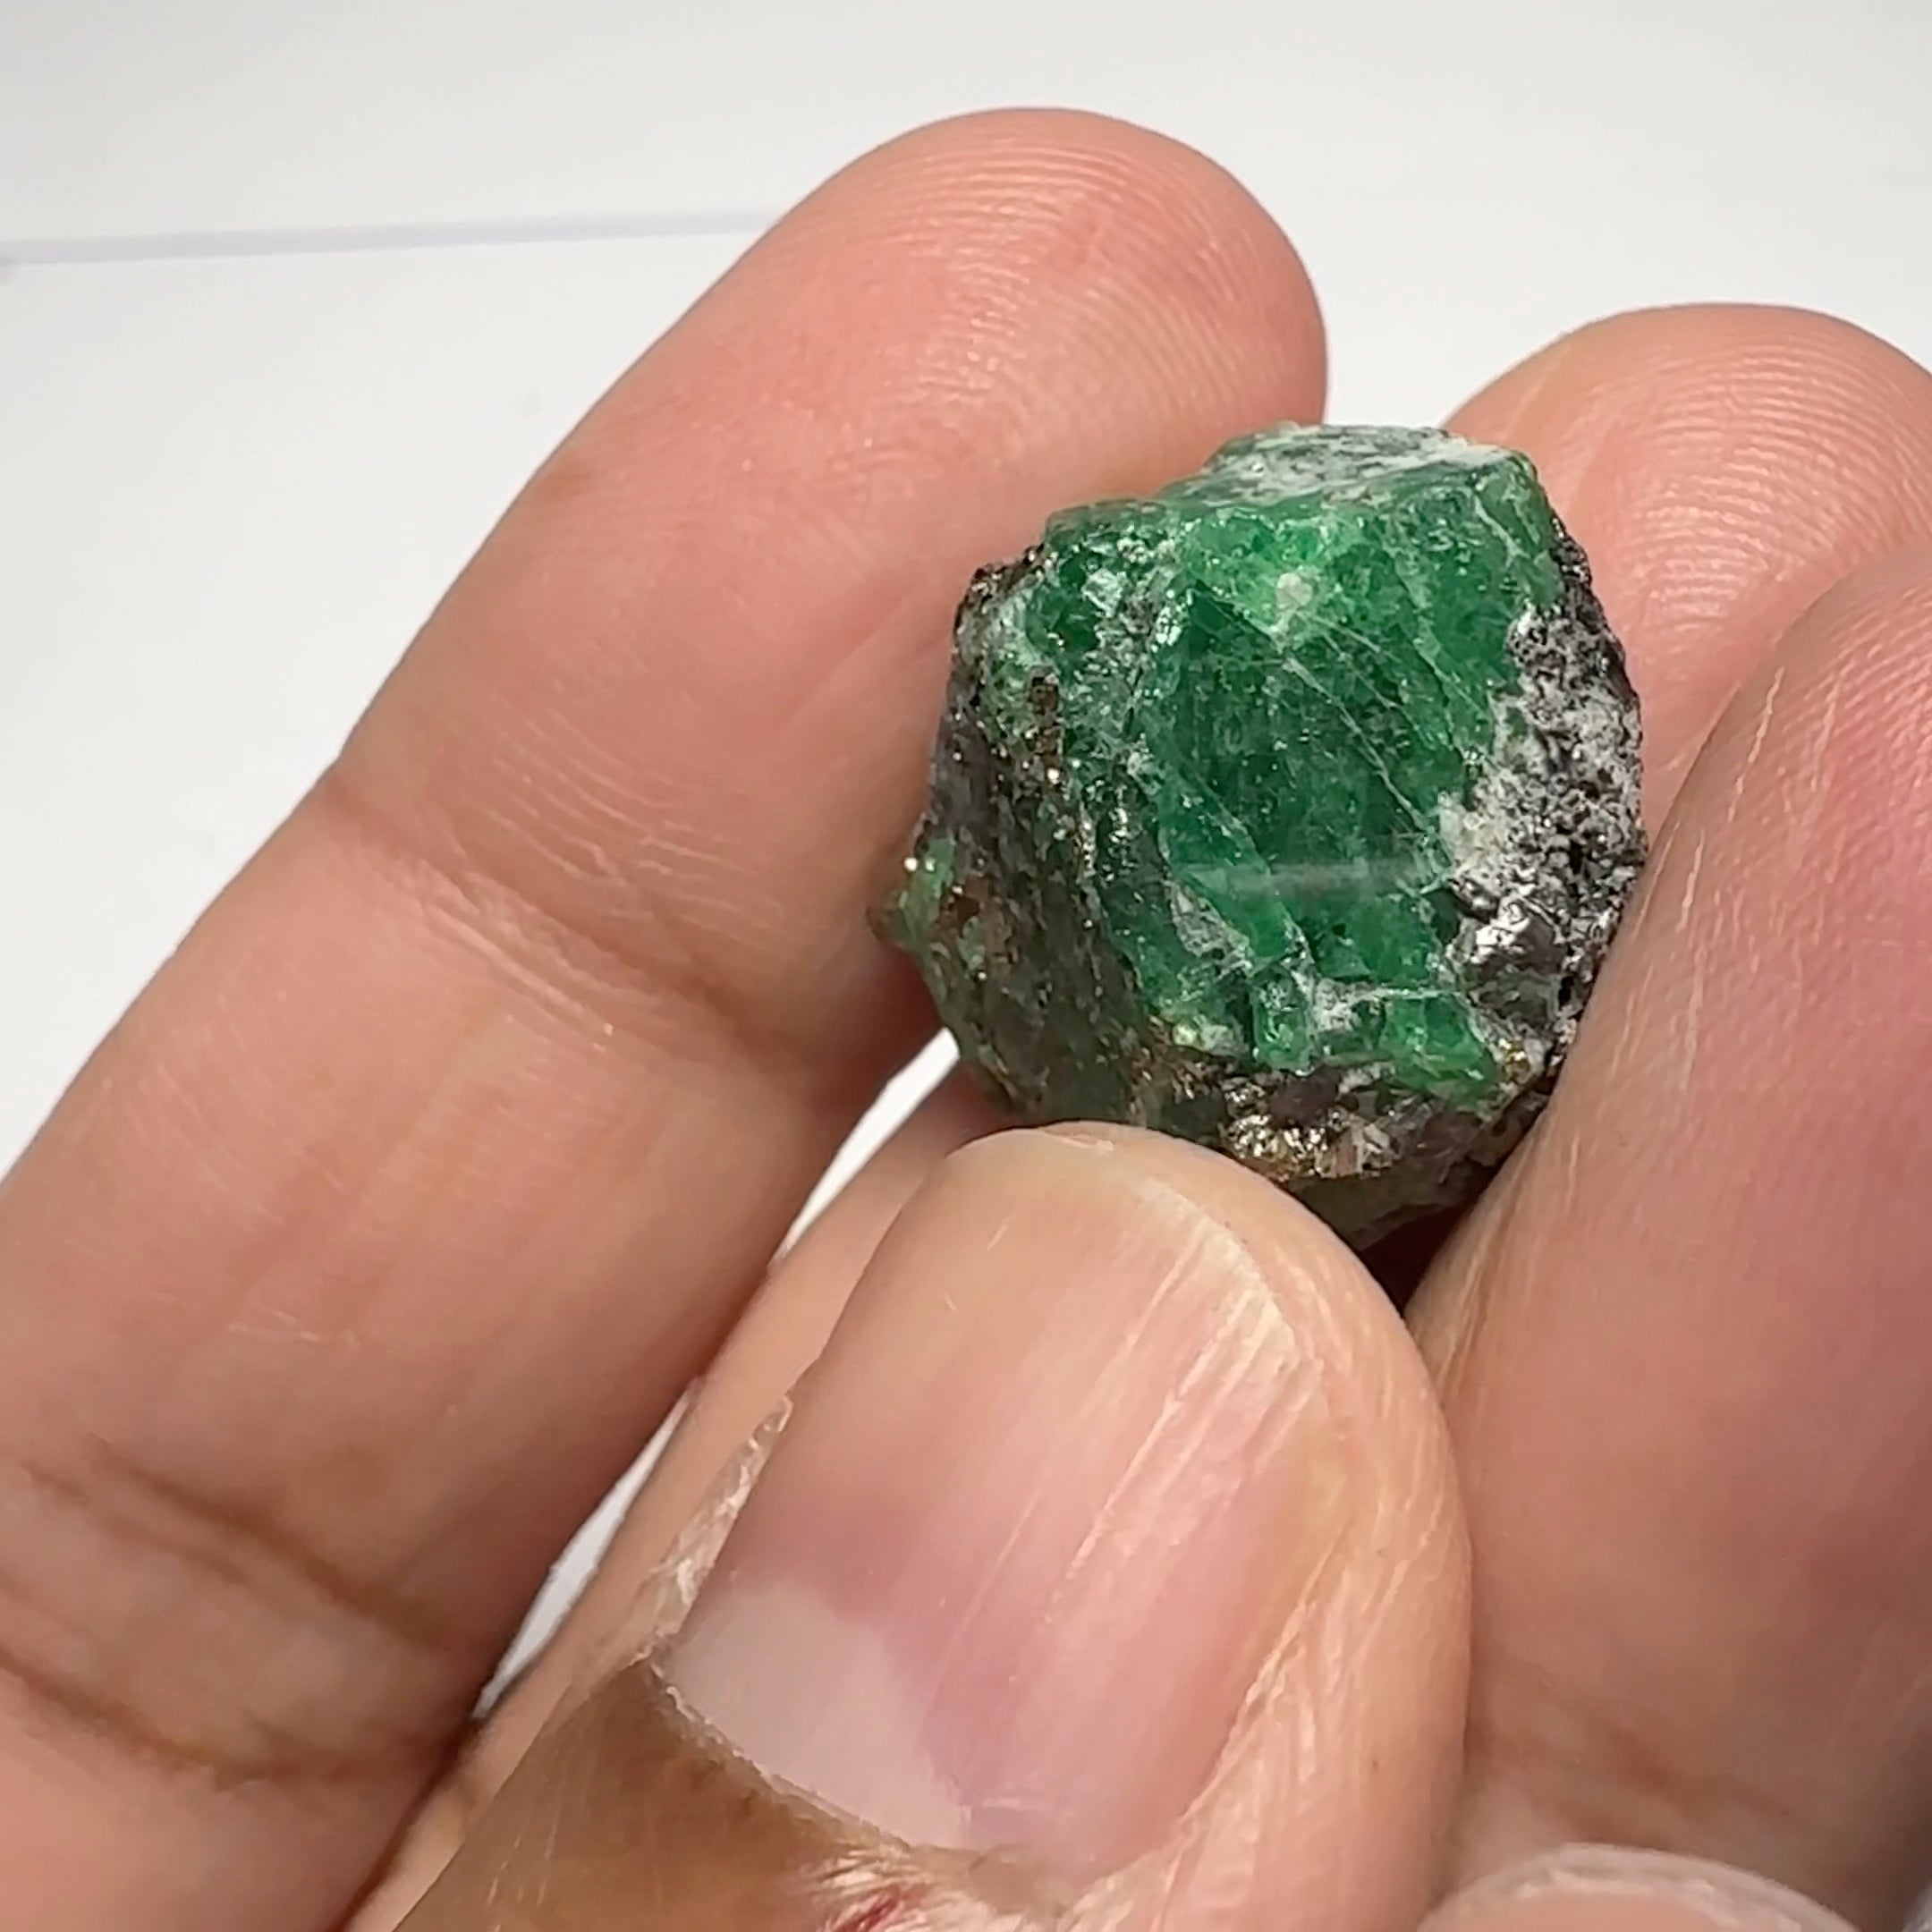 33.27ct Tsavorite Garnet on matrix with pyrite, Merelani, Tanzania